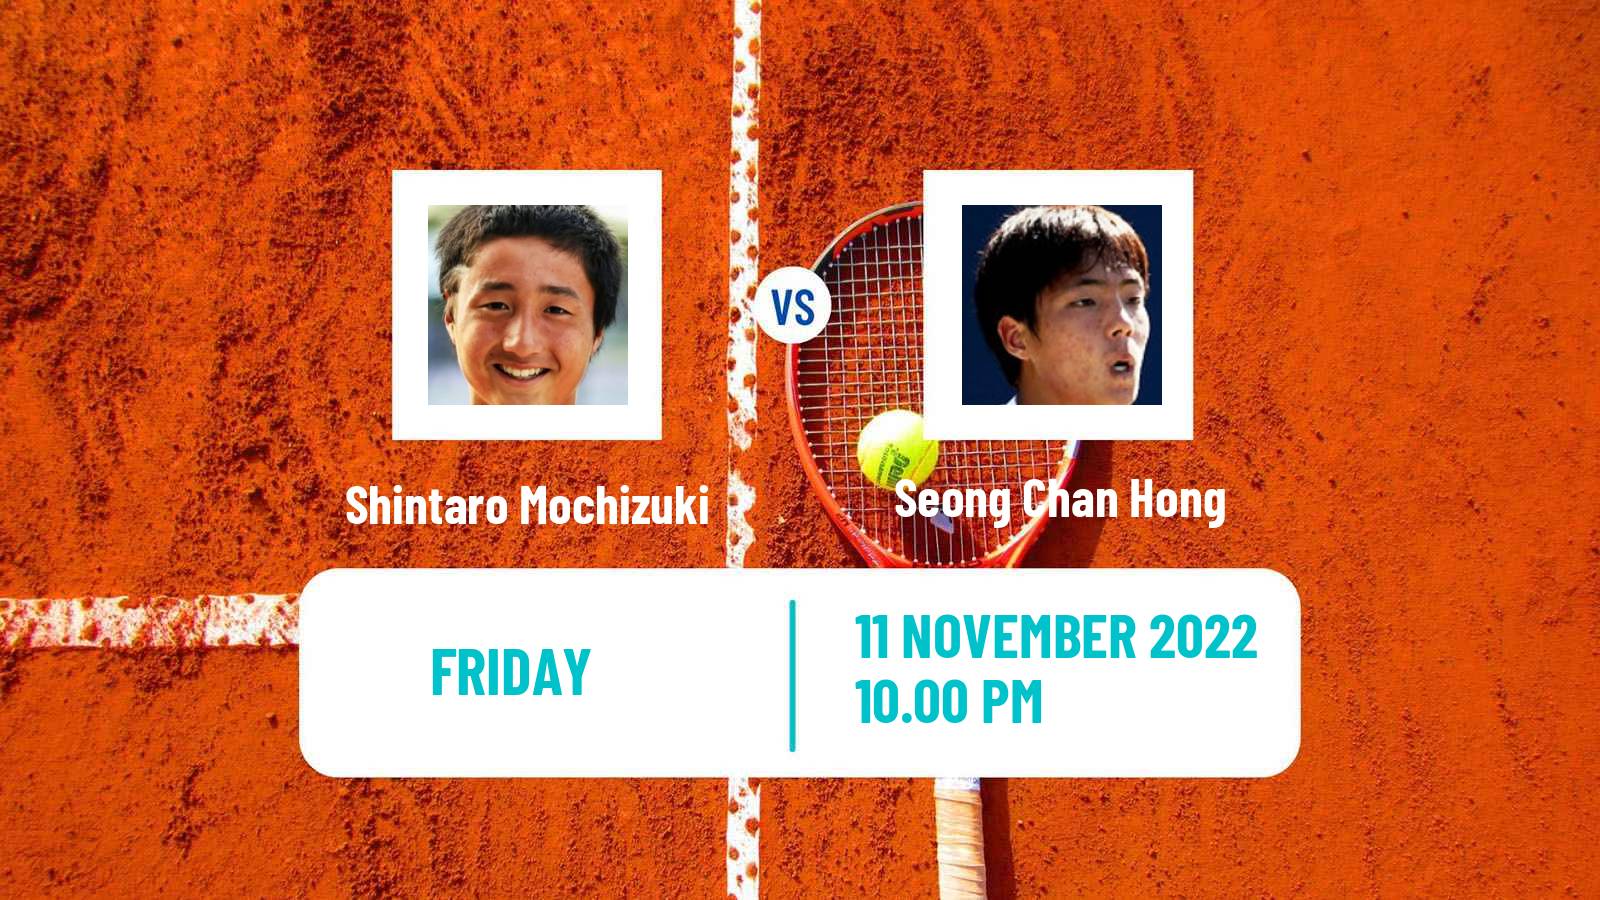 Tennis ATP Challenger Shintaro Mochizuki - Seong Chan Hong